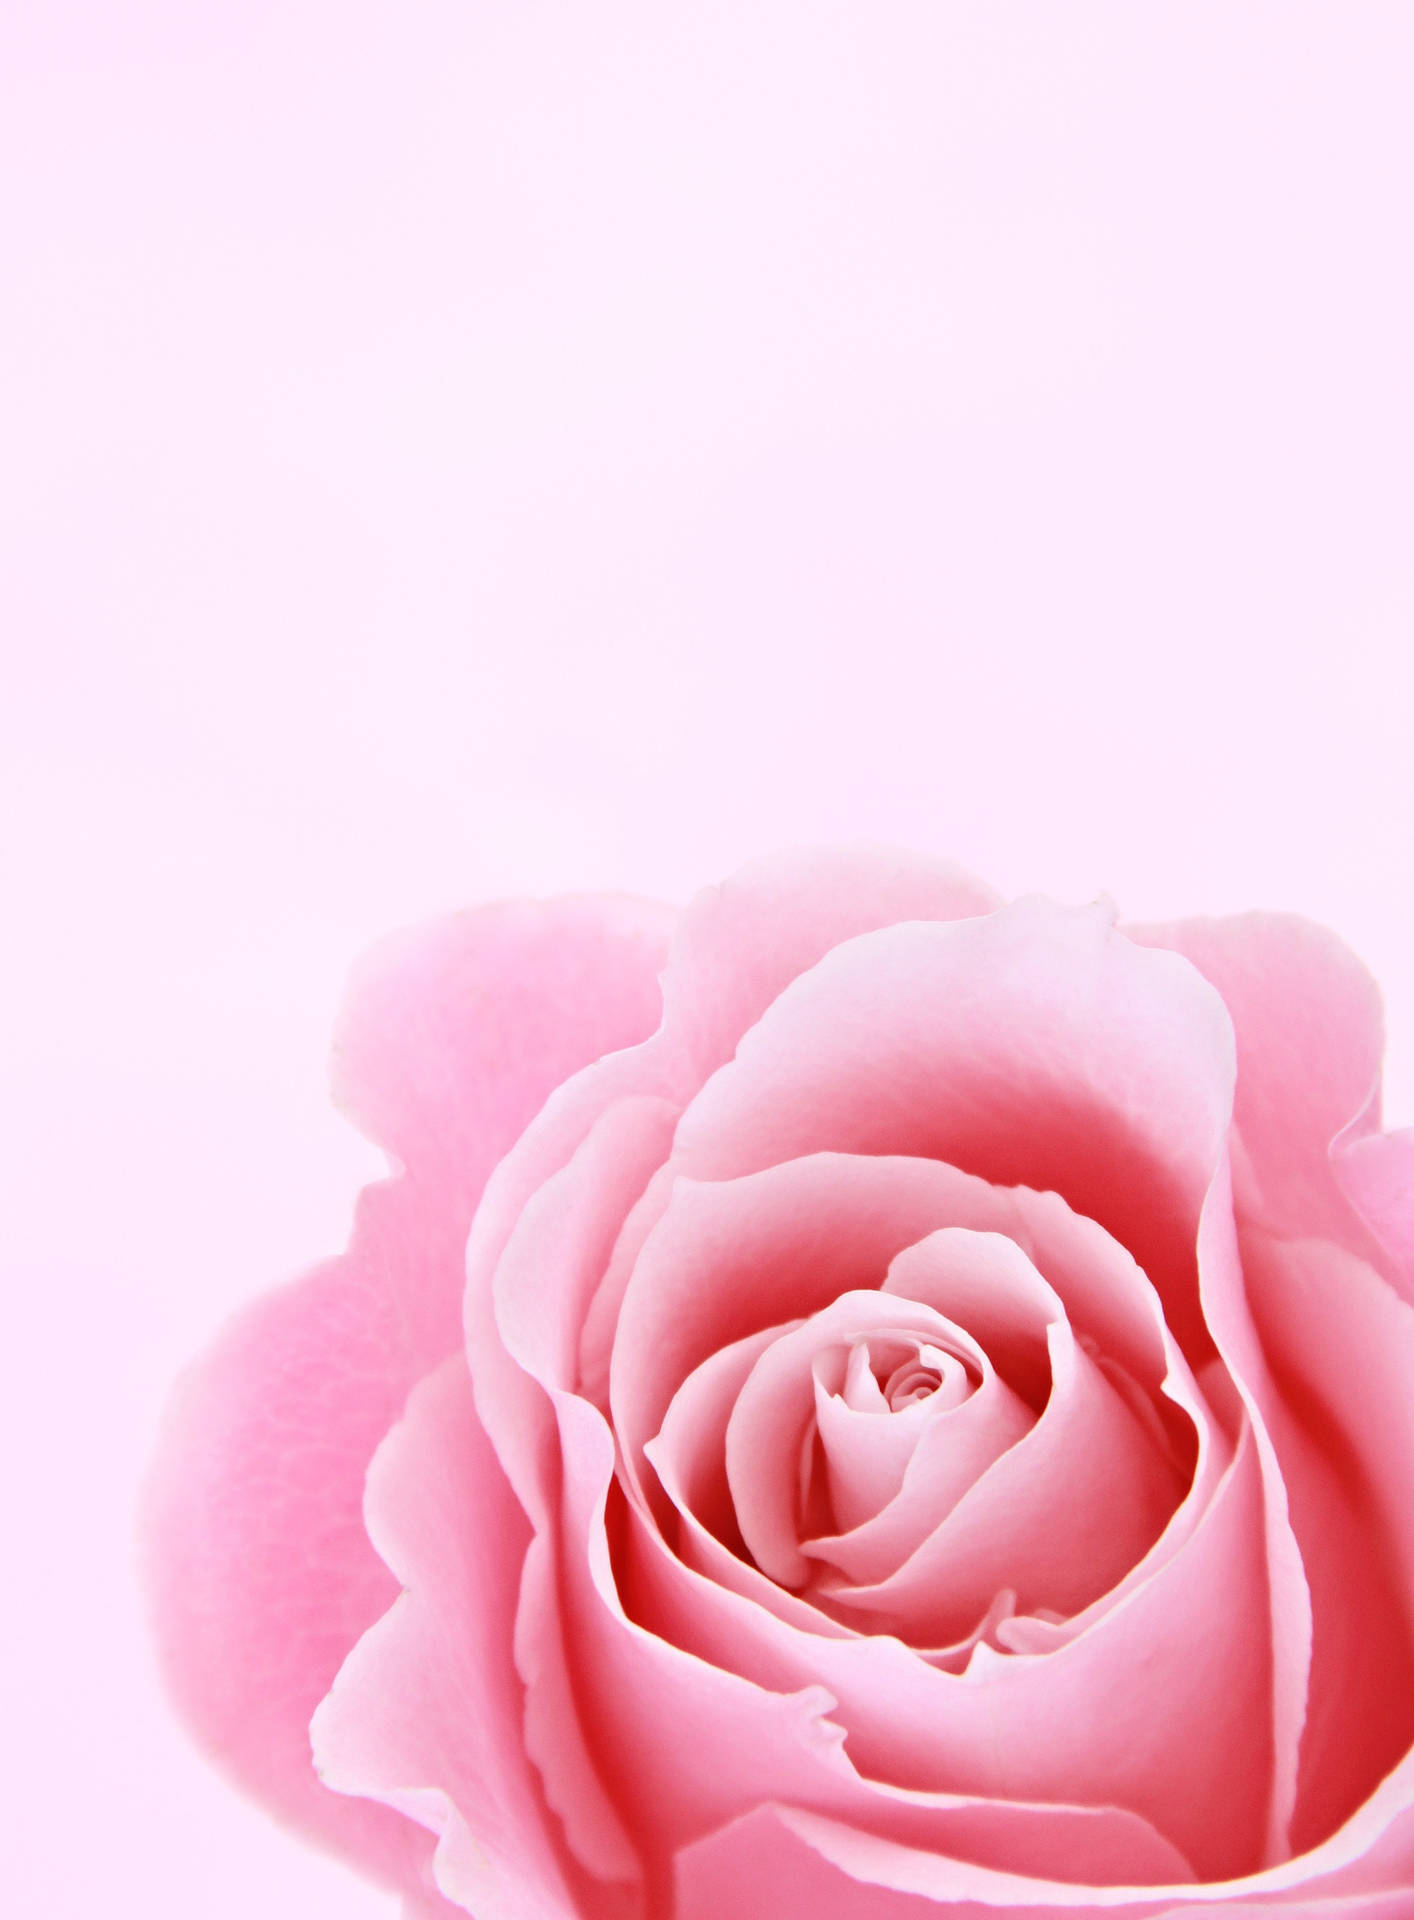 Elegant Iphone Lock Screen With Soft Rose Design Background